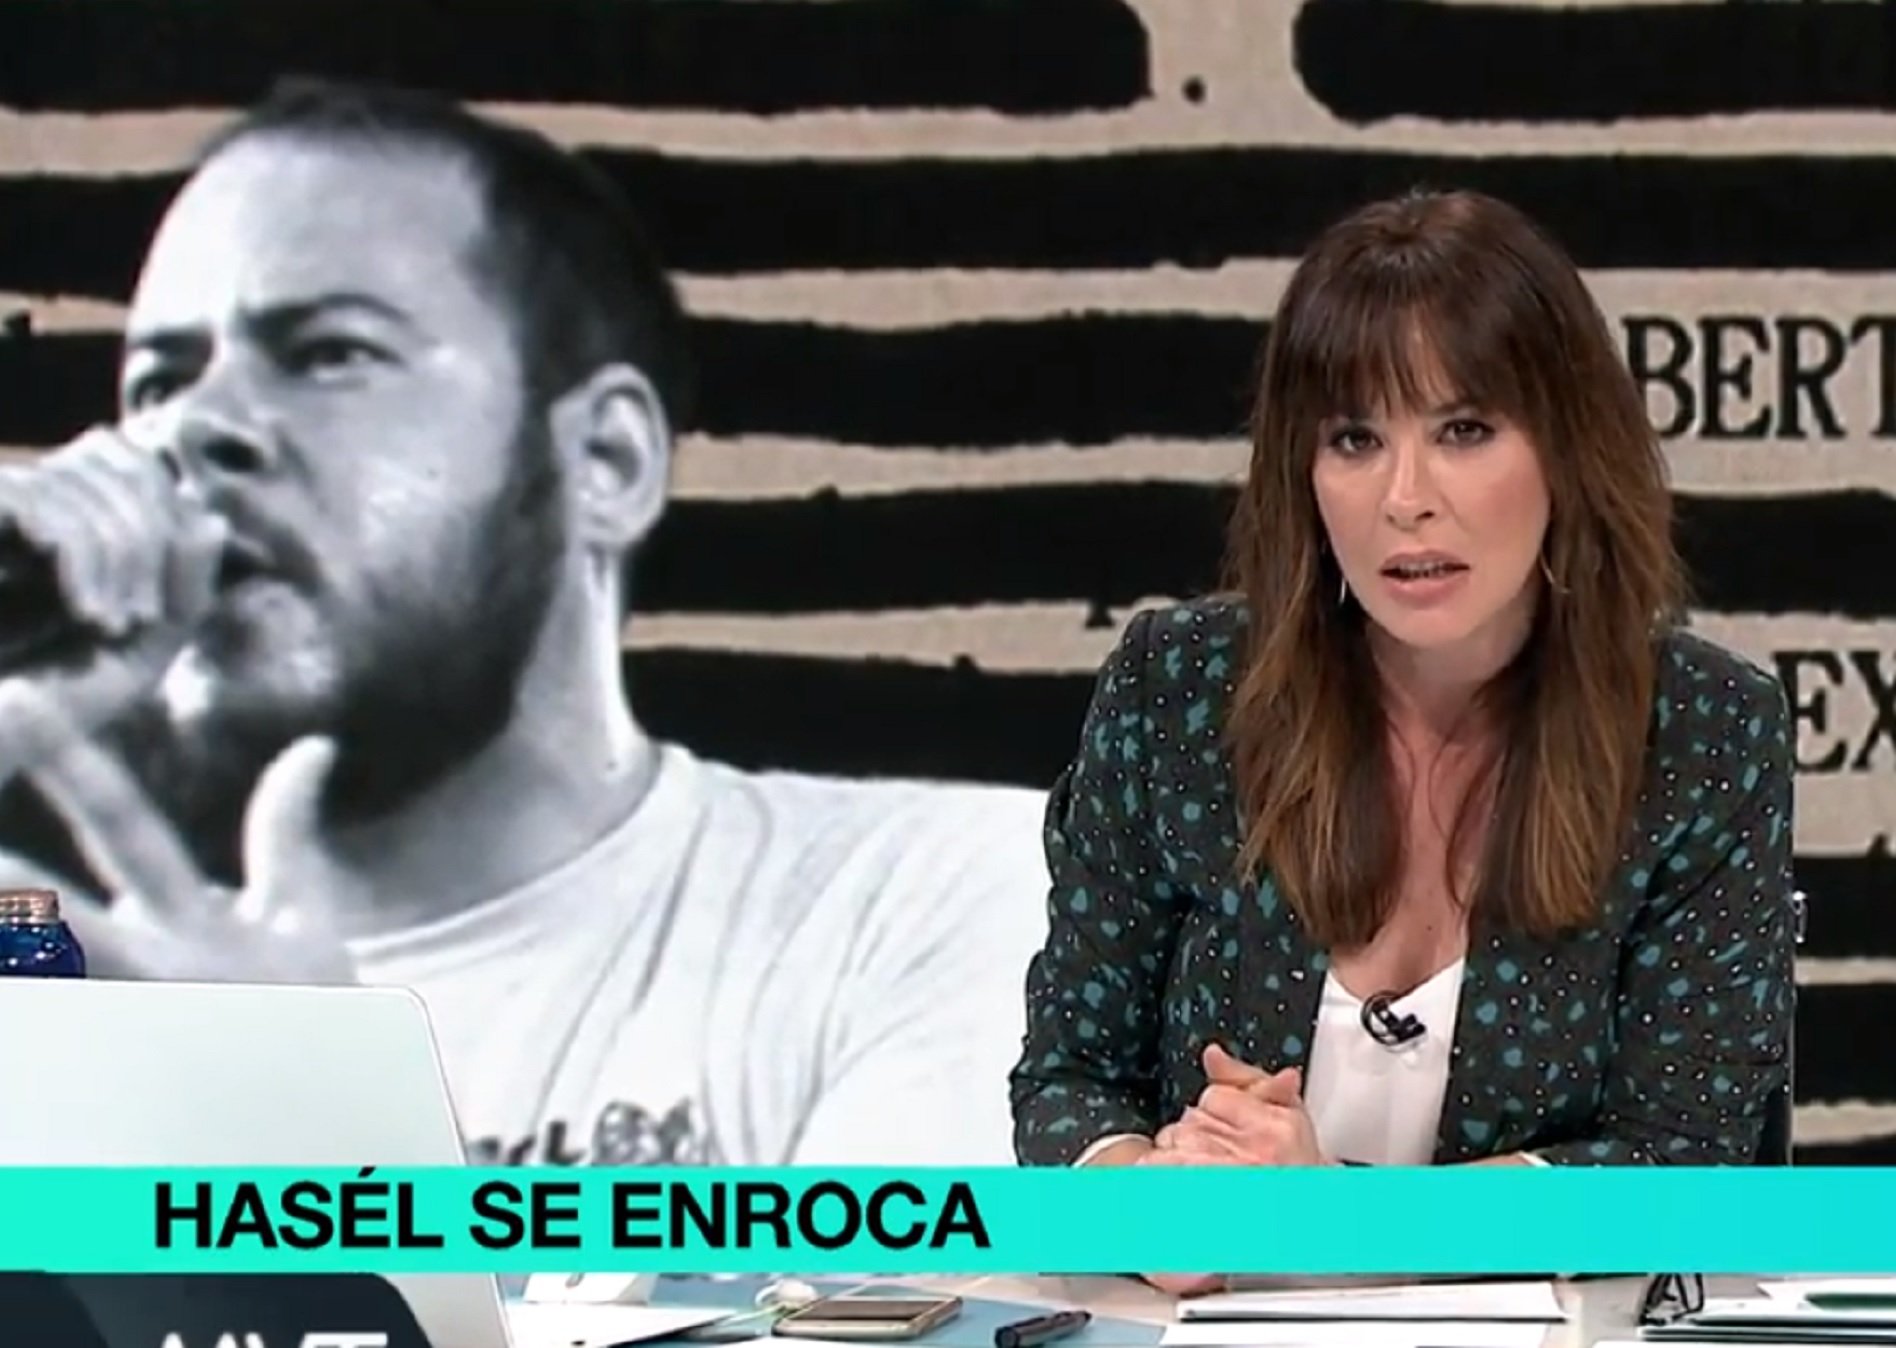 La Sexta titula "Pablo Hasel se enroca". Jair Domínguez explota "Bienvenidos a...